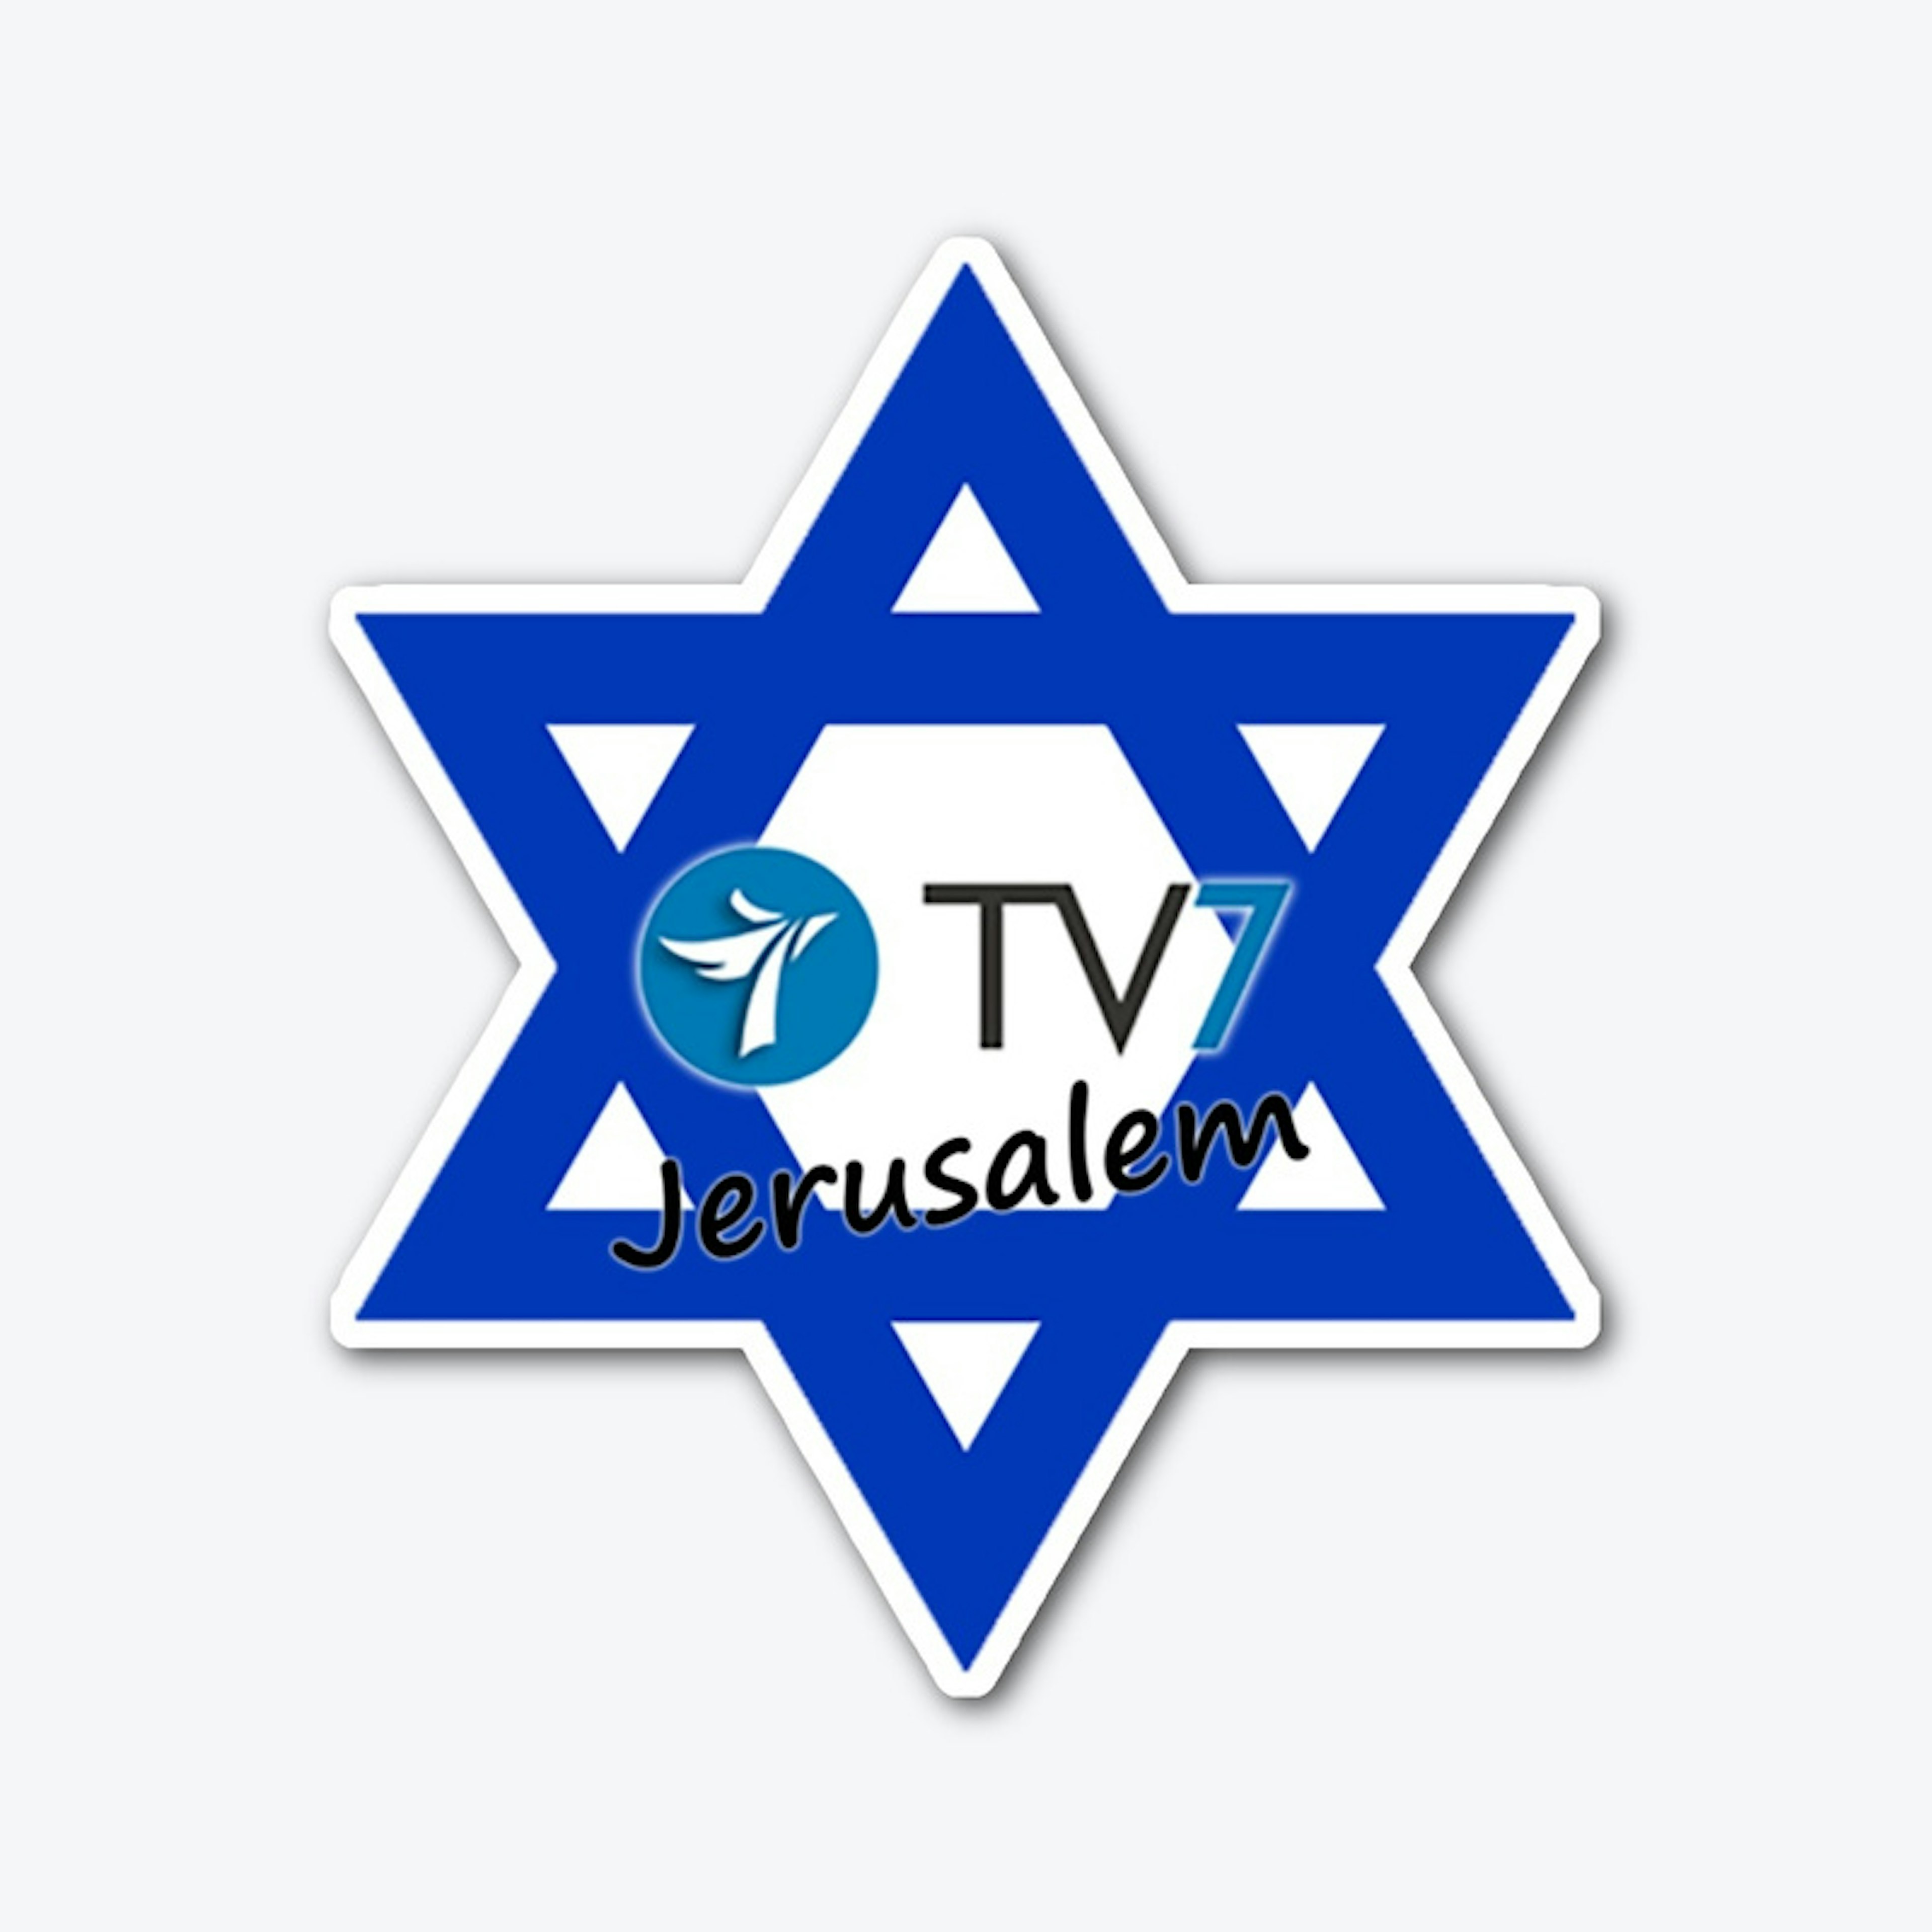 TV7 Israel News/Star of David sticker